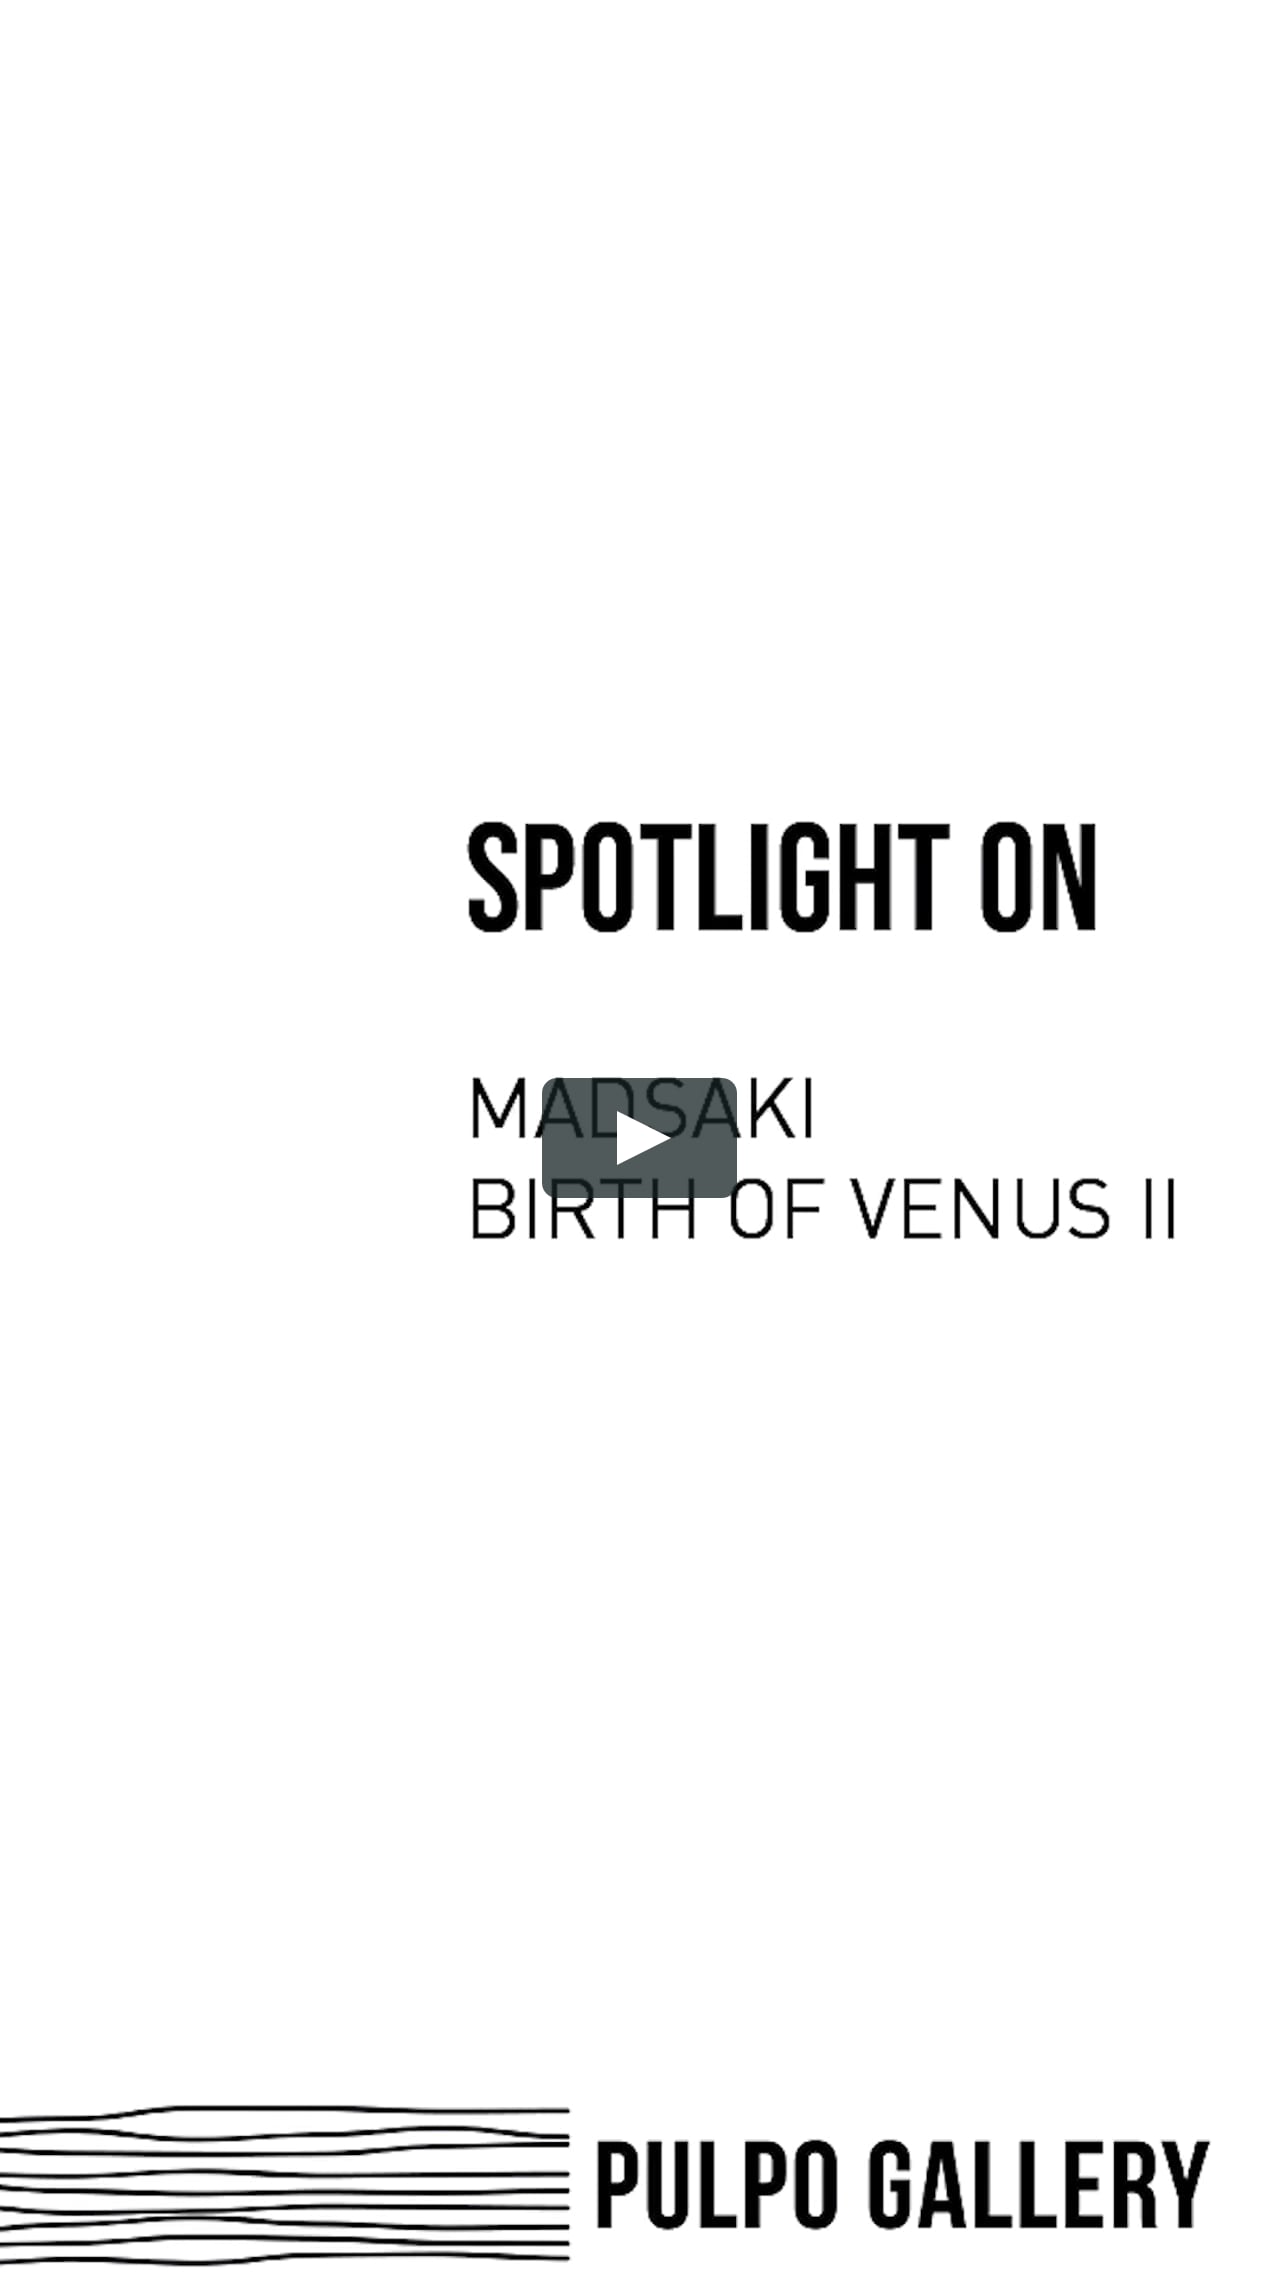 Birth of Venus II ポスター MADSAKI美術品/アンティーク